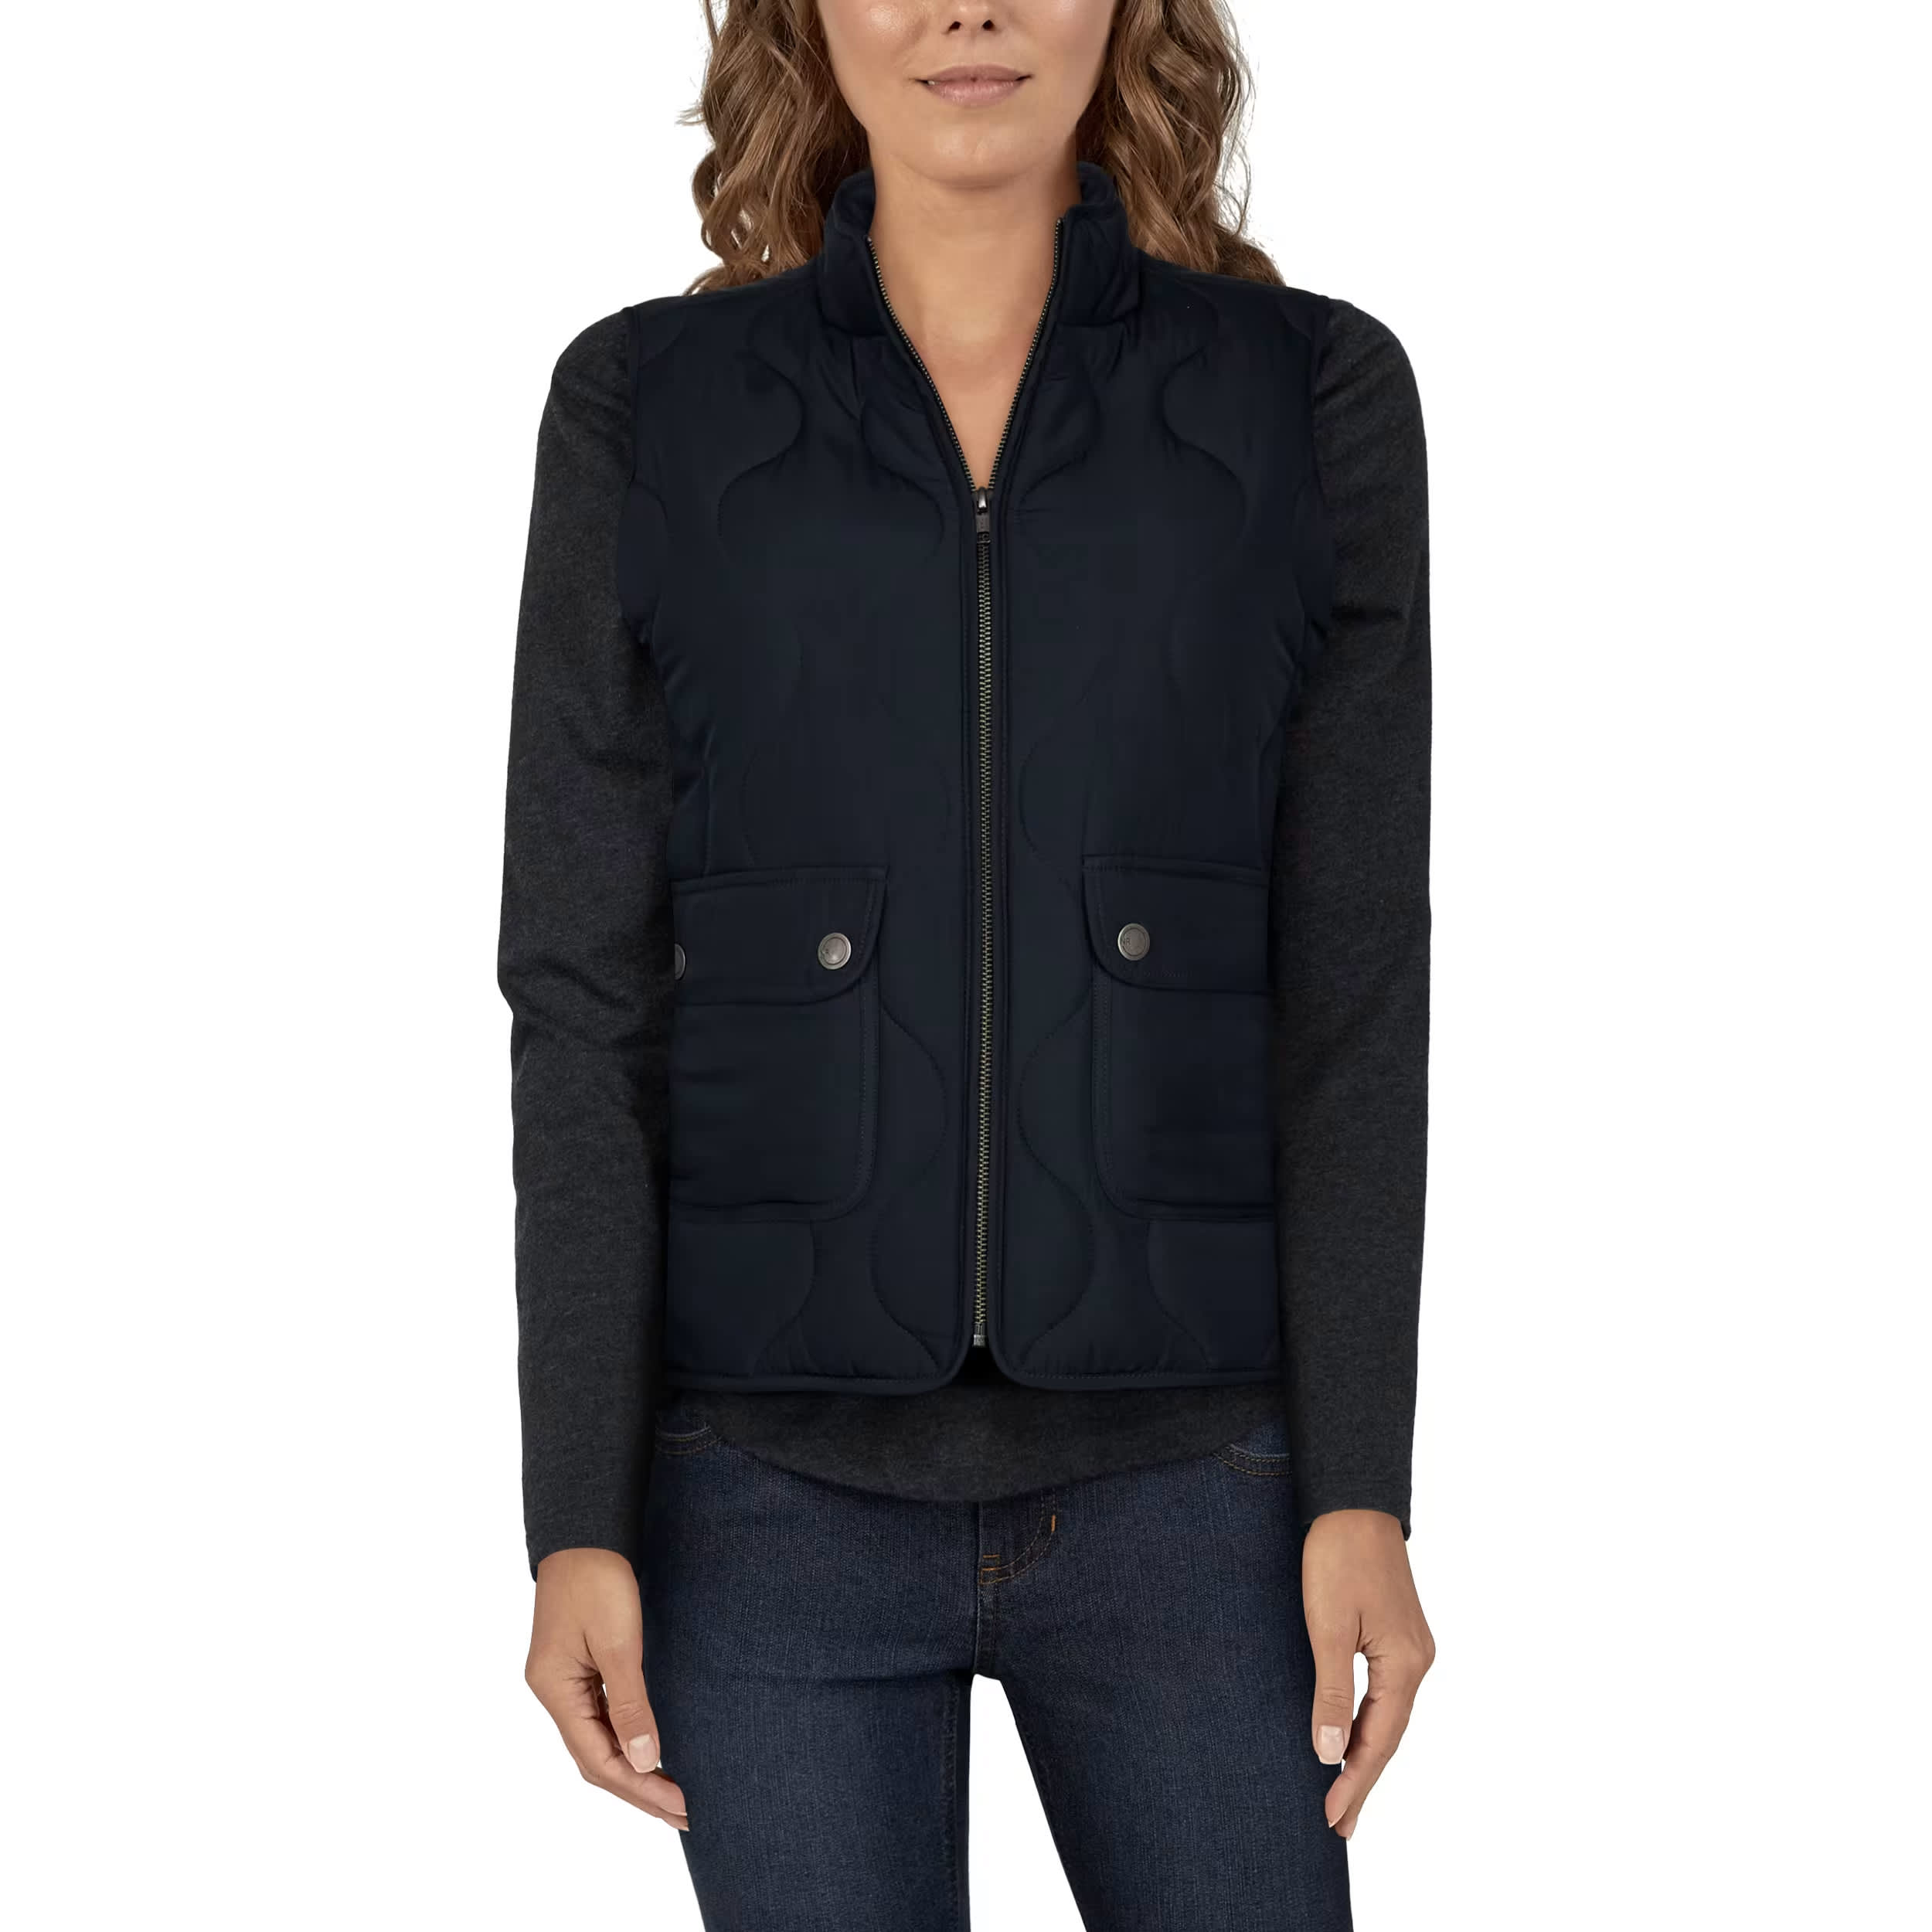 Natural Reflections Spring Full-Zip Fleece Jacket for Ladies